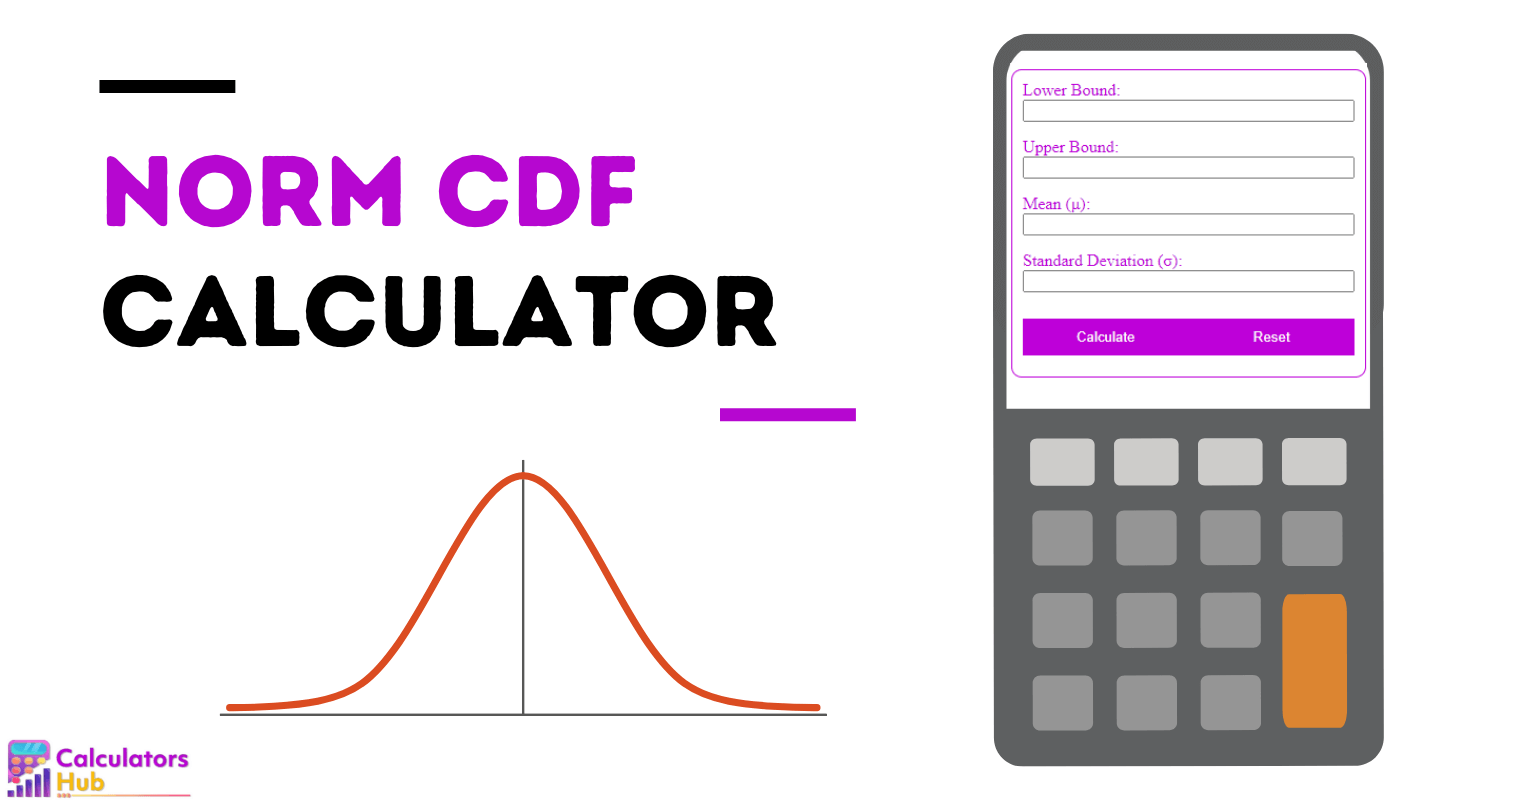 Norm CDF Calculator